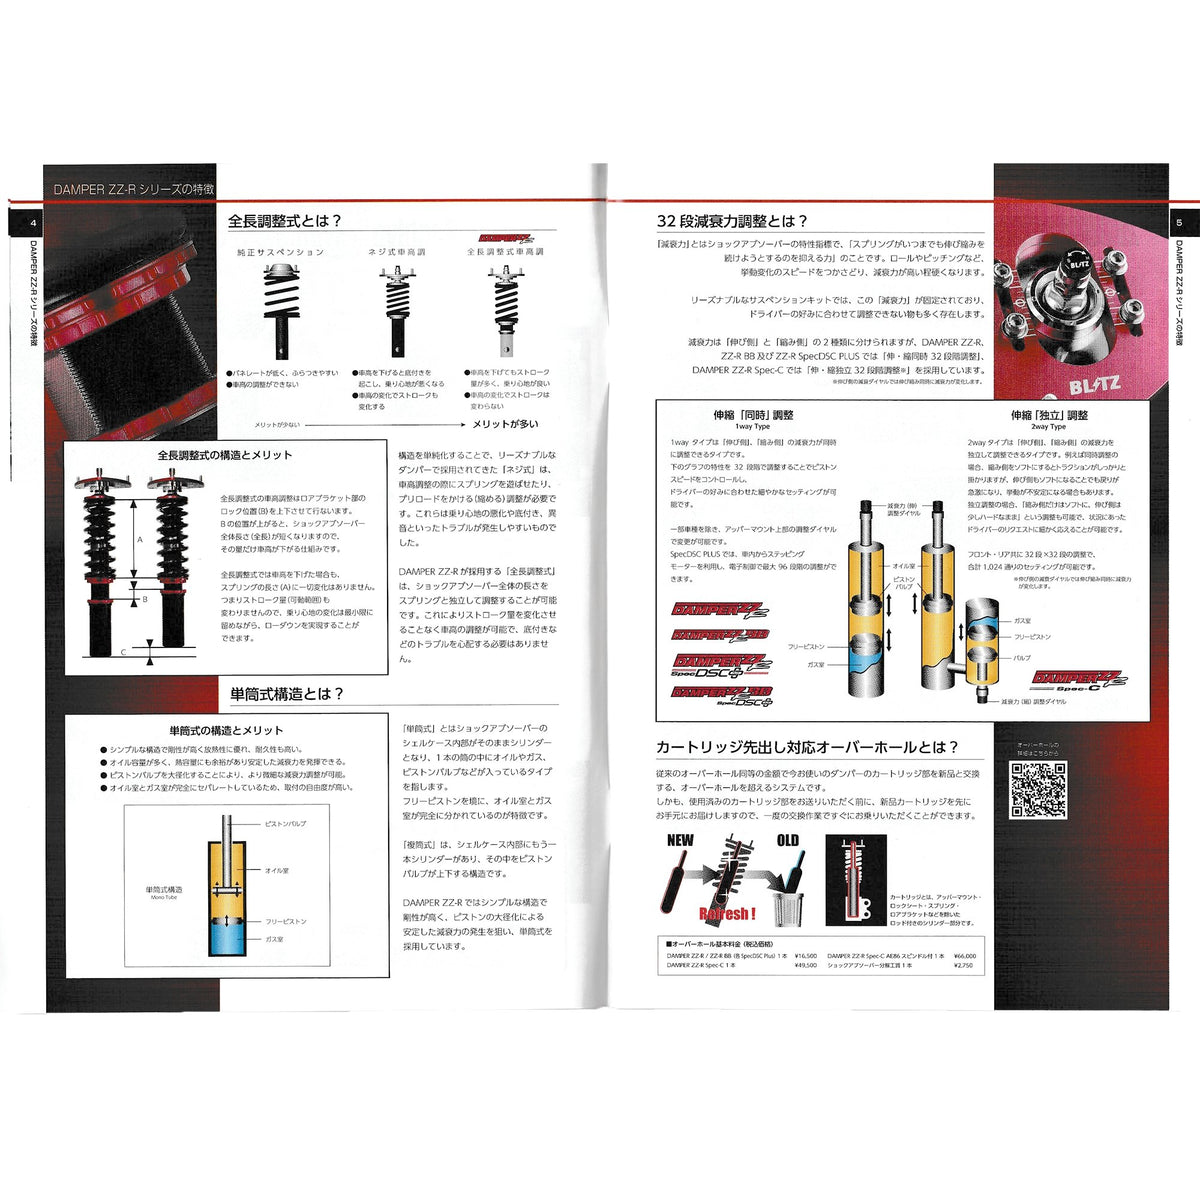 New JDM BLITZ Footwork Perfect Mini Catalog Brochure 2022 Vol.1 - Sugoi JDM